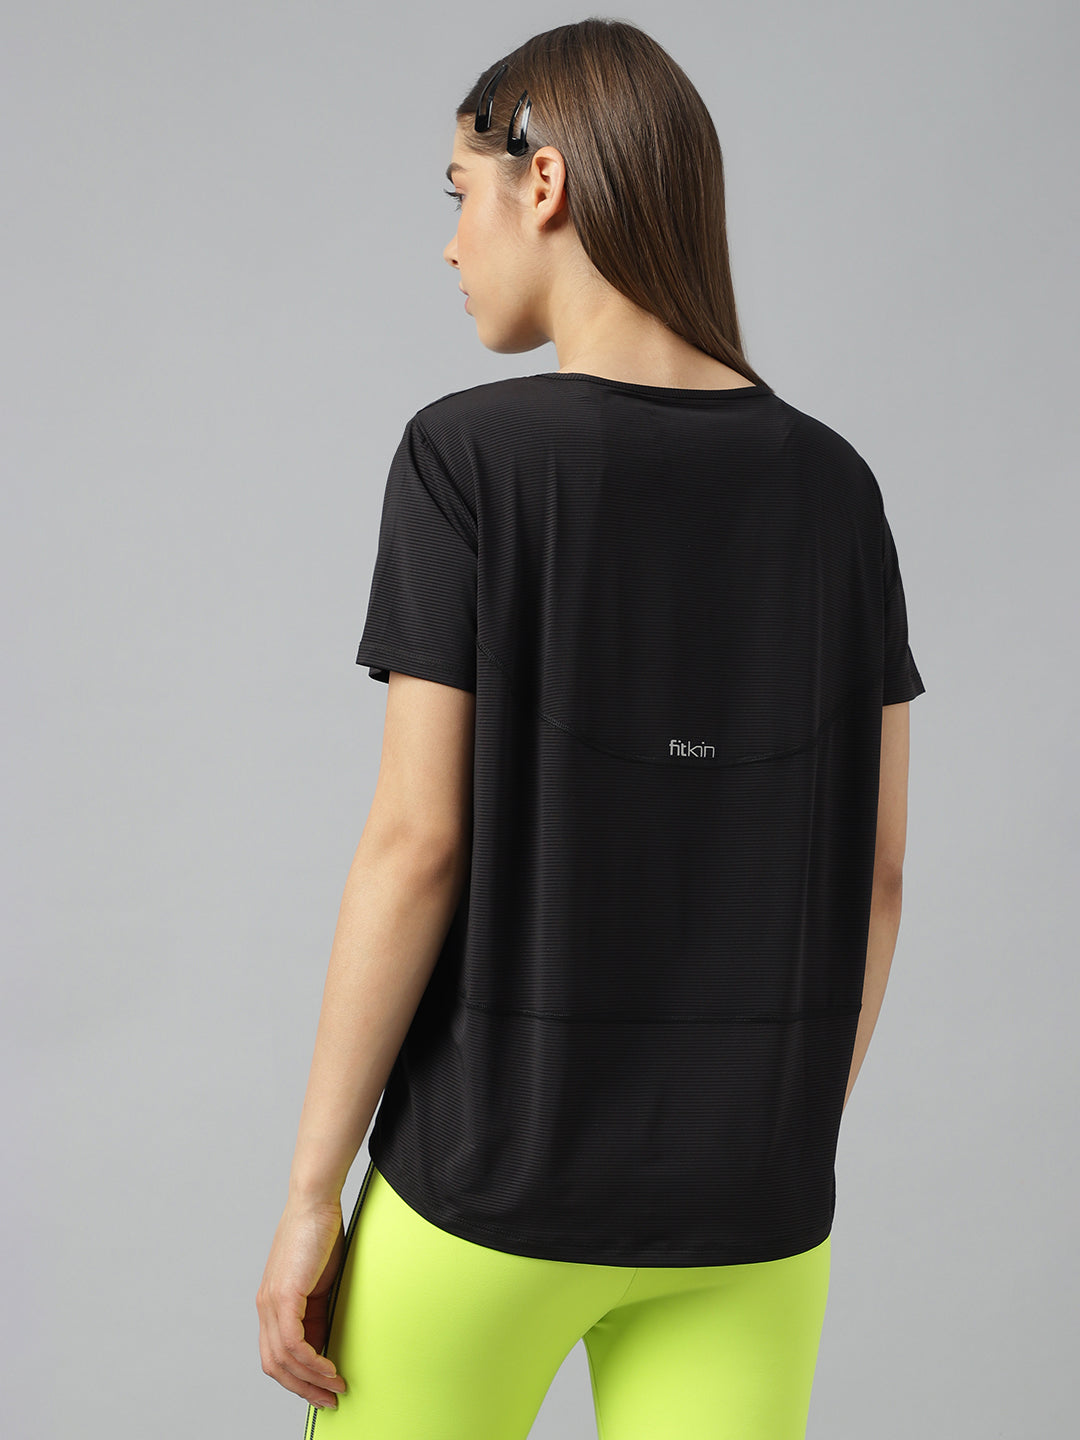 Fitkin women self stripes back mesh design short sleeves t-shirt